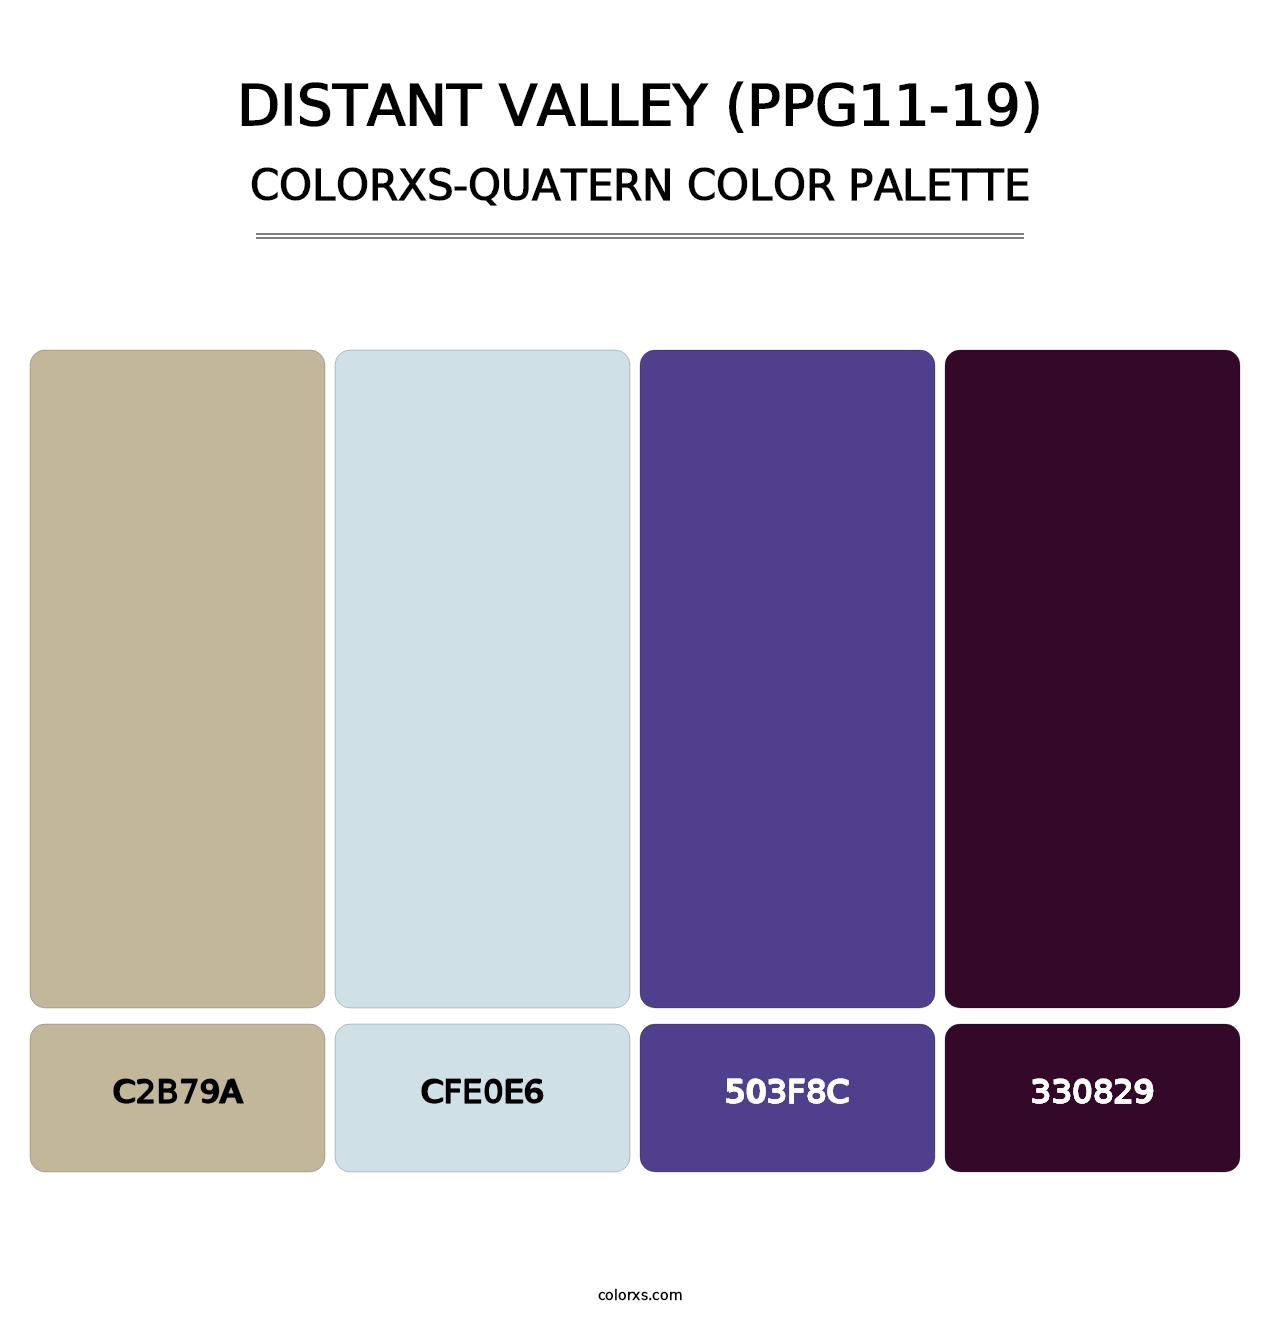 Distant Valley (PPG11-19) - Colorxs Quatern Palette